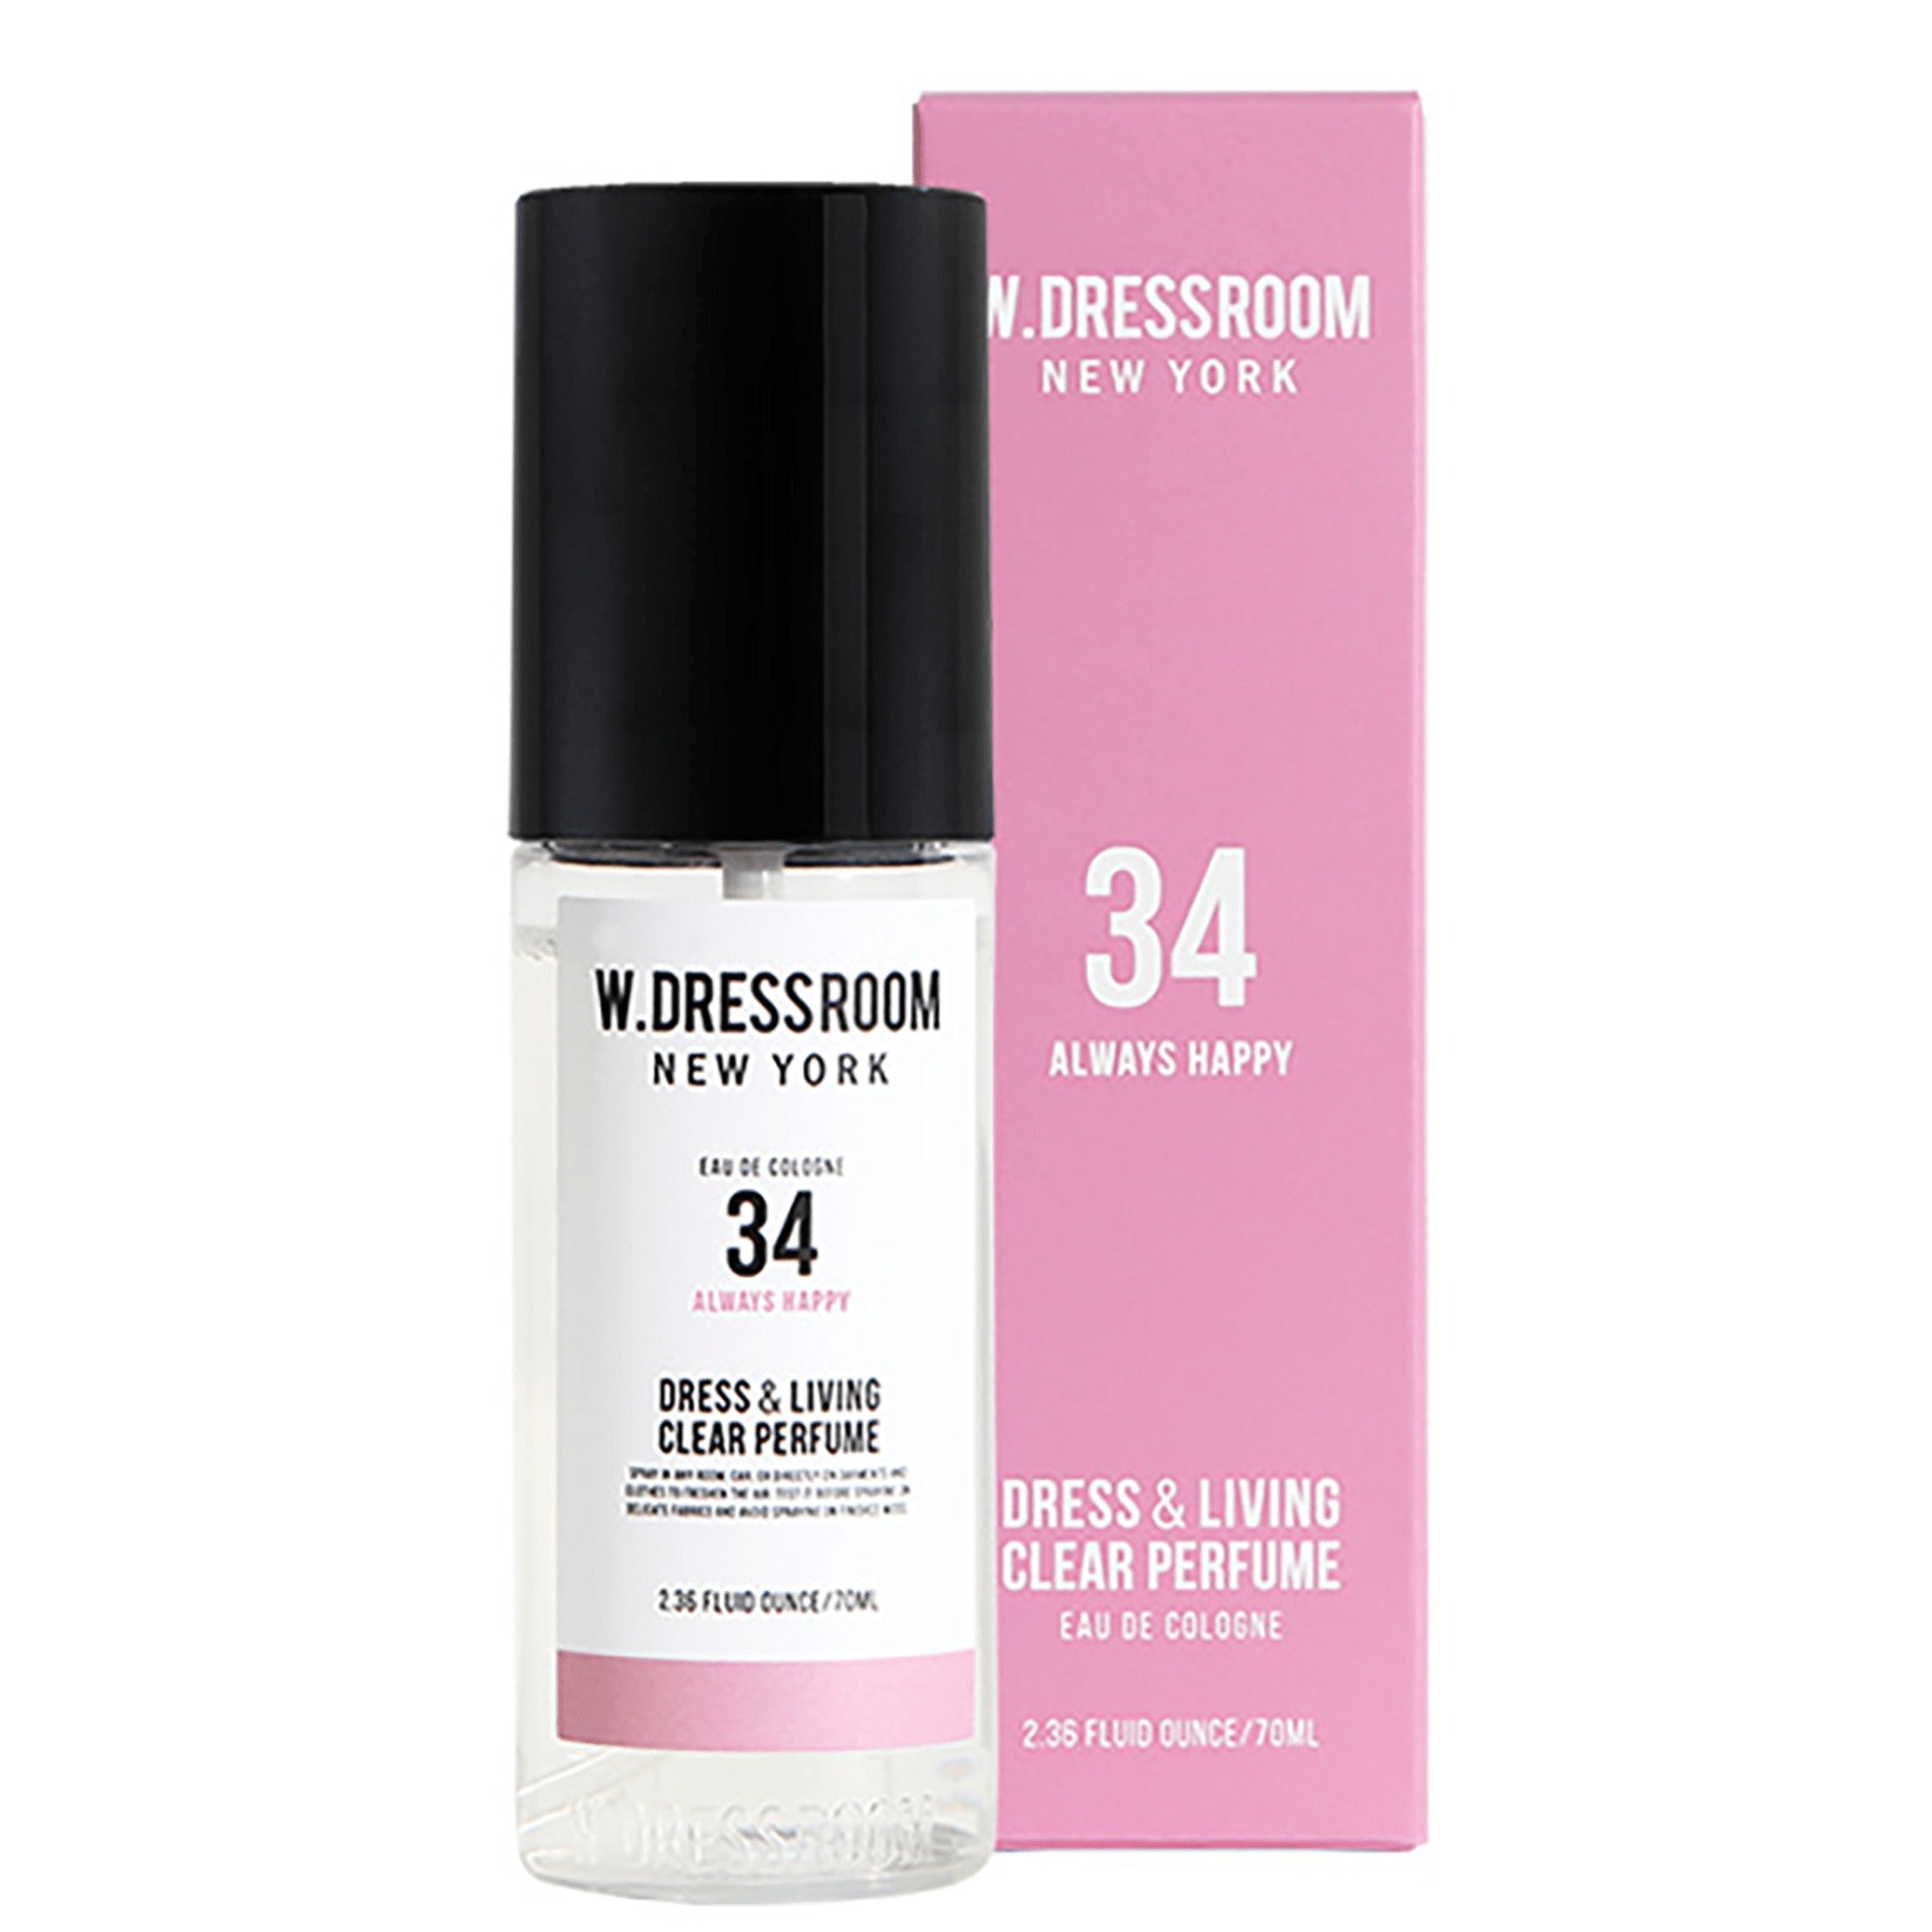 W.DRESSROOM Dress & Living Clear Perfume - 70ml